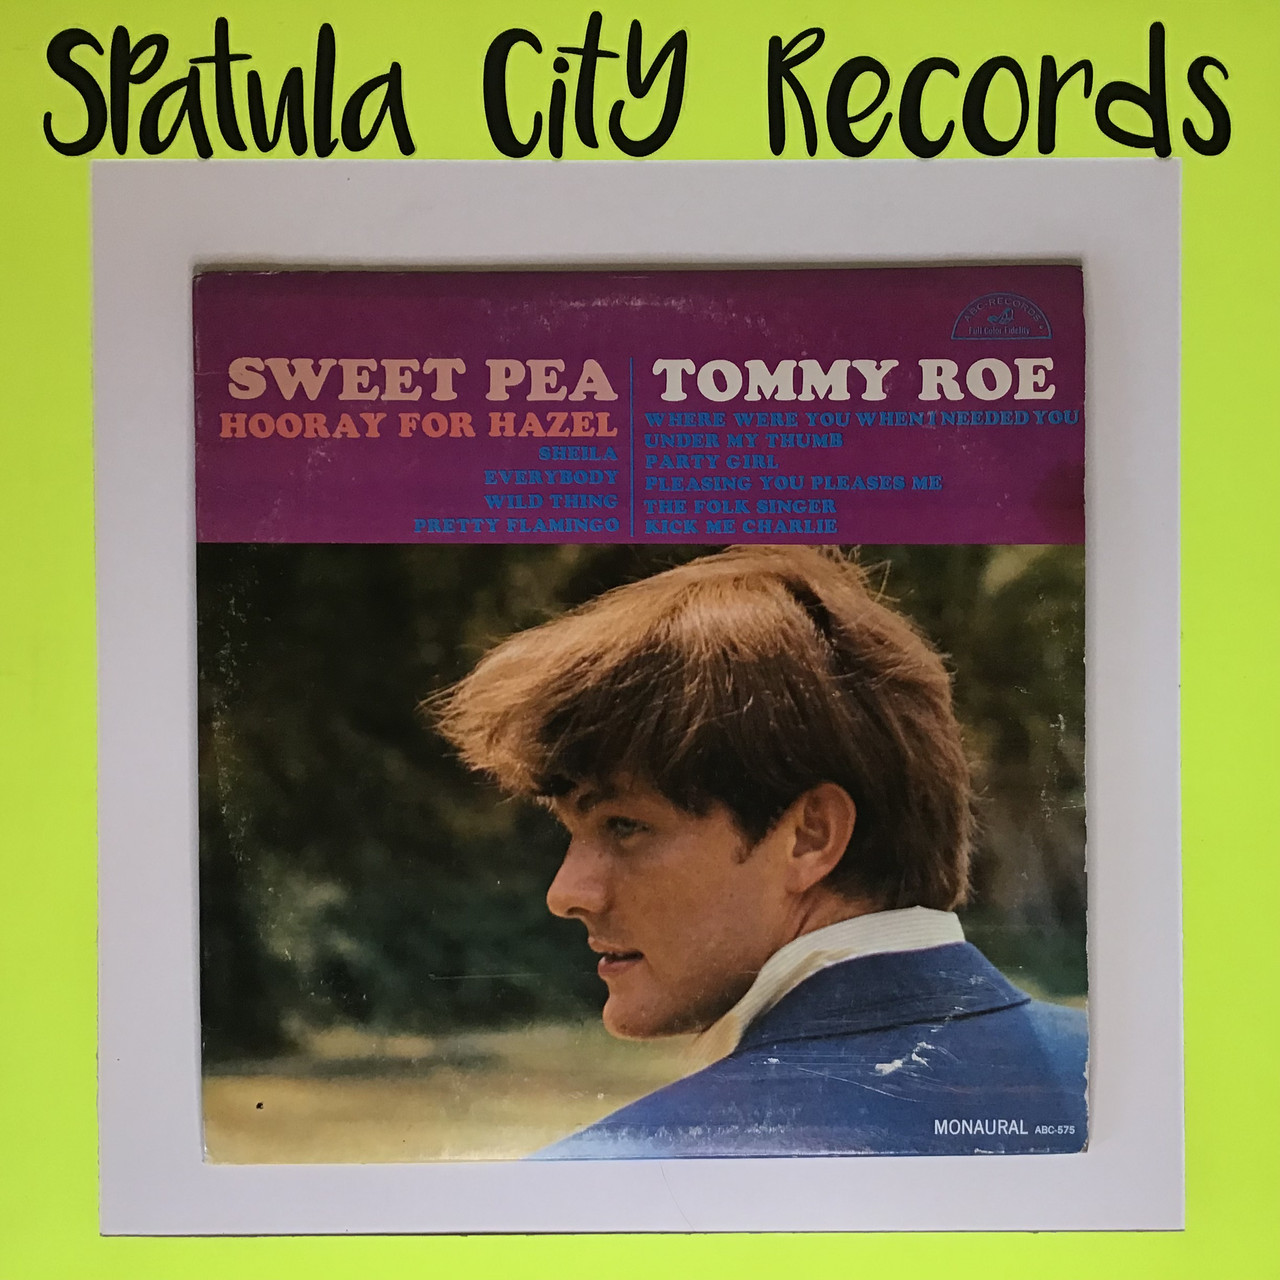 Tommy Roe - Sweat Pea - MONO - vinyl record LP